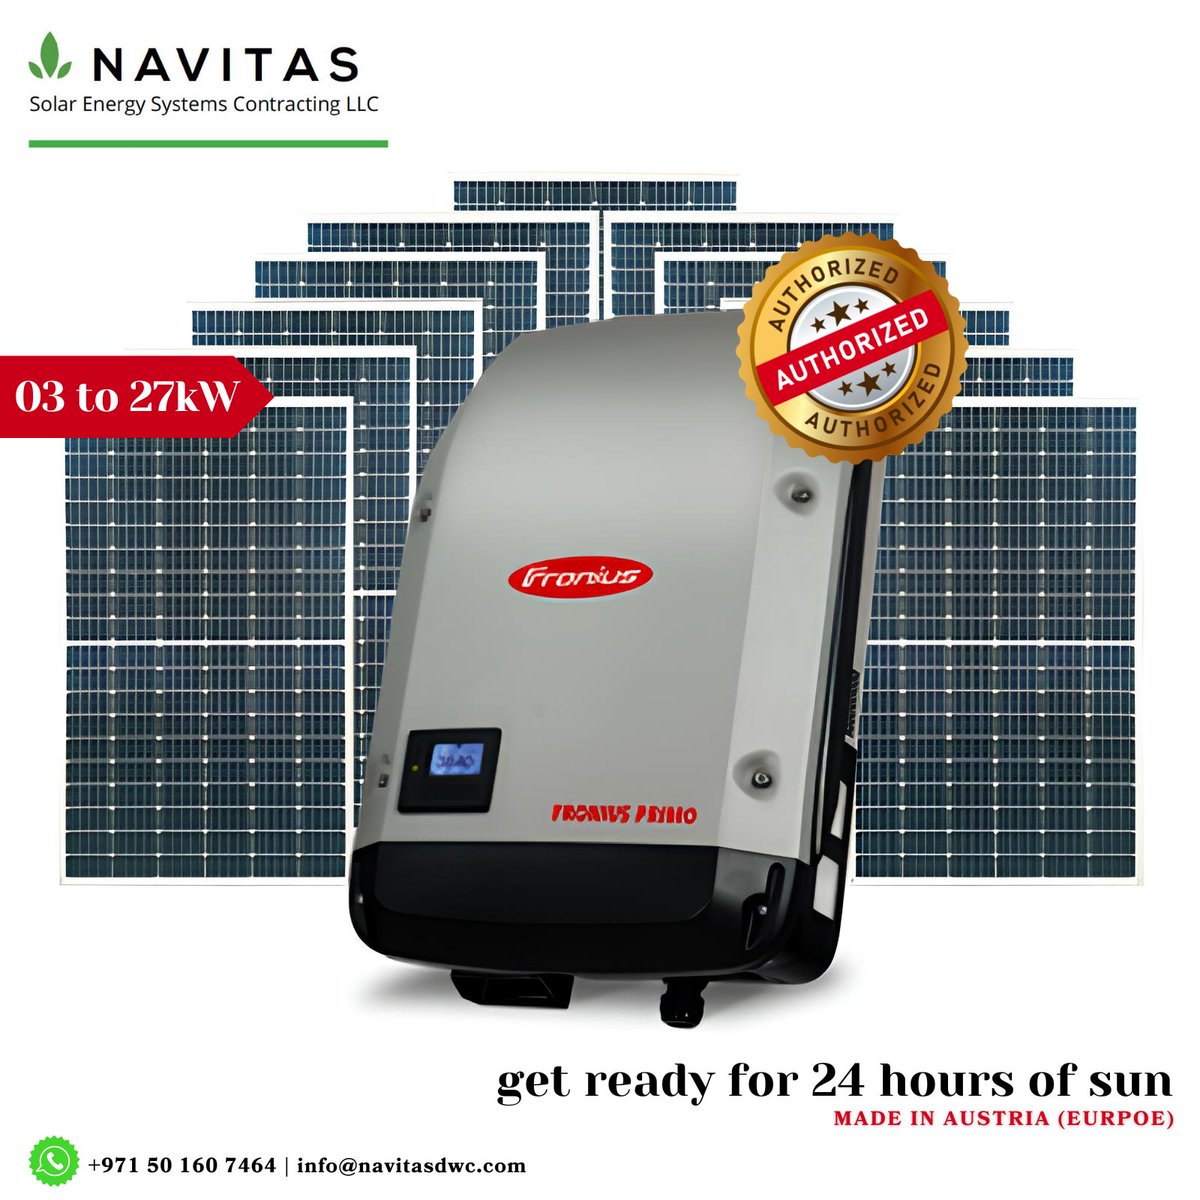 Fronius Inverters from Navitas Solar
MADE IN AUSTRIA (EUROPE)

New stock available...
+971 4884 2069 | info@navitasdwc.com

#NavitasDubai #SolarUAE  #solarpanels #solarpower #solarenergy #solar #fronius #froniusuae #fronıuseurope #renewableEnergy #greenenergy